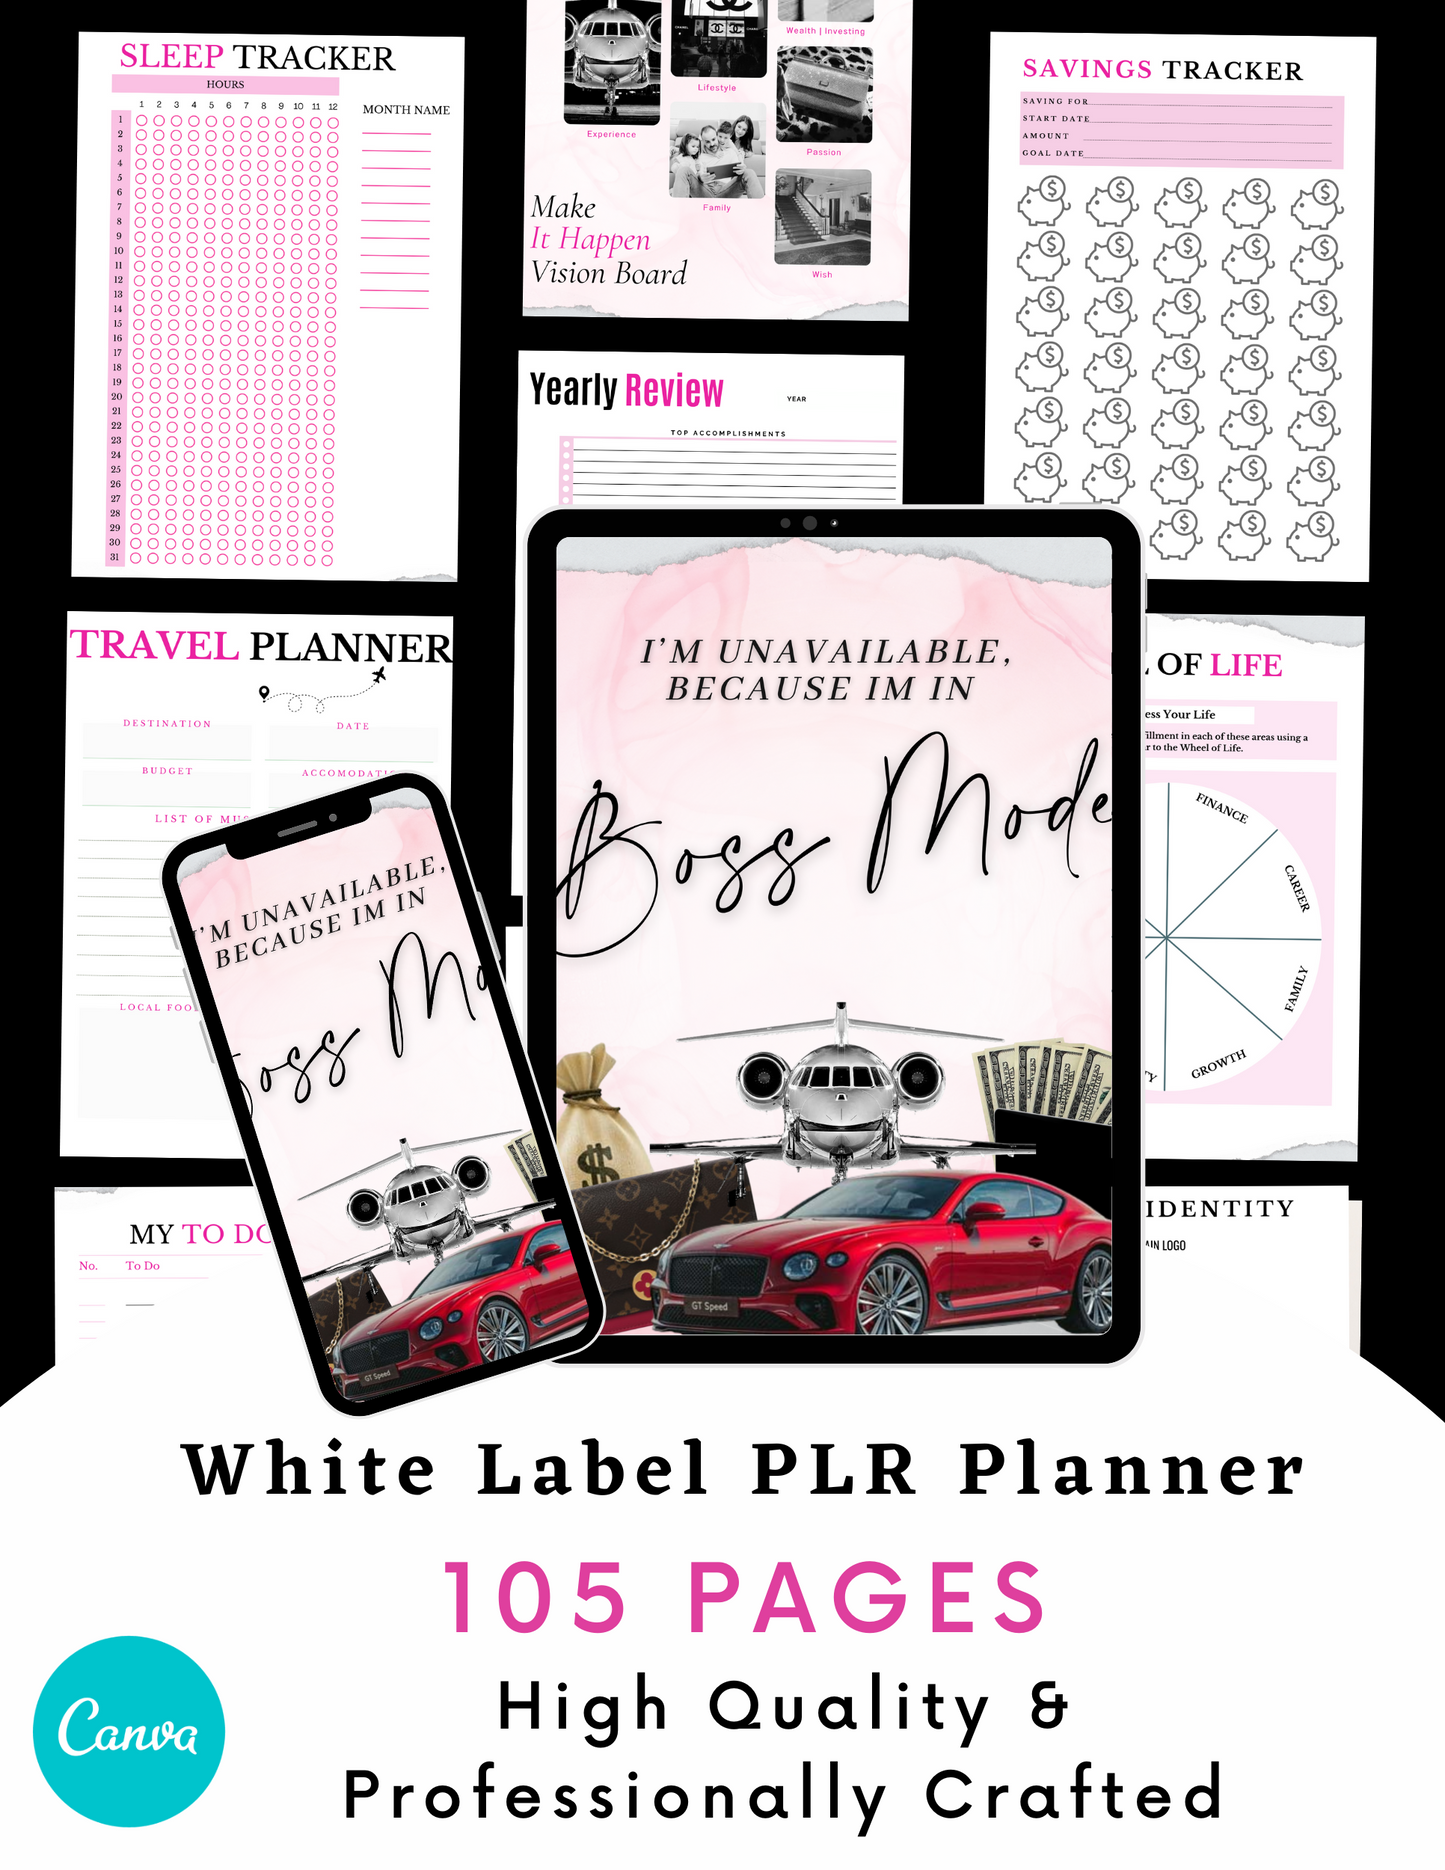 PLR - RESELL - 3 NEW Lady Boss Bundle Planner, Digital Planner, 2023, 24 & 25 Digital Planner, iPad, 200+ pages!  Worth every penny!